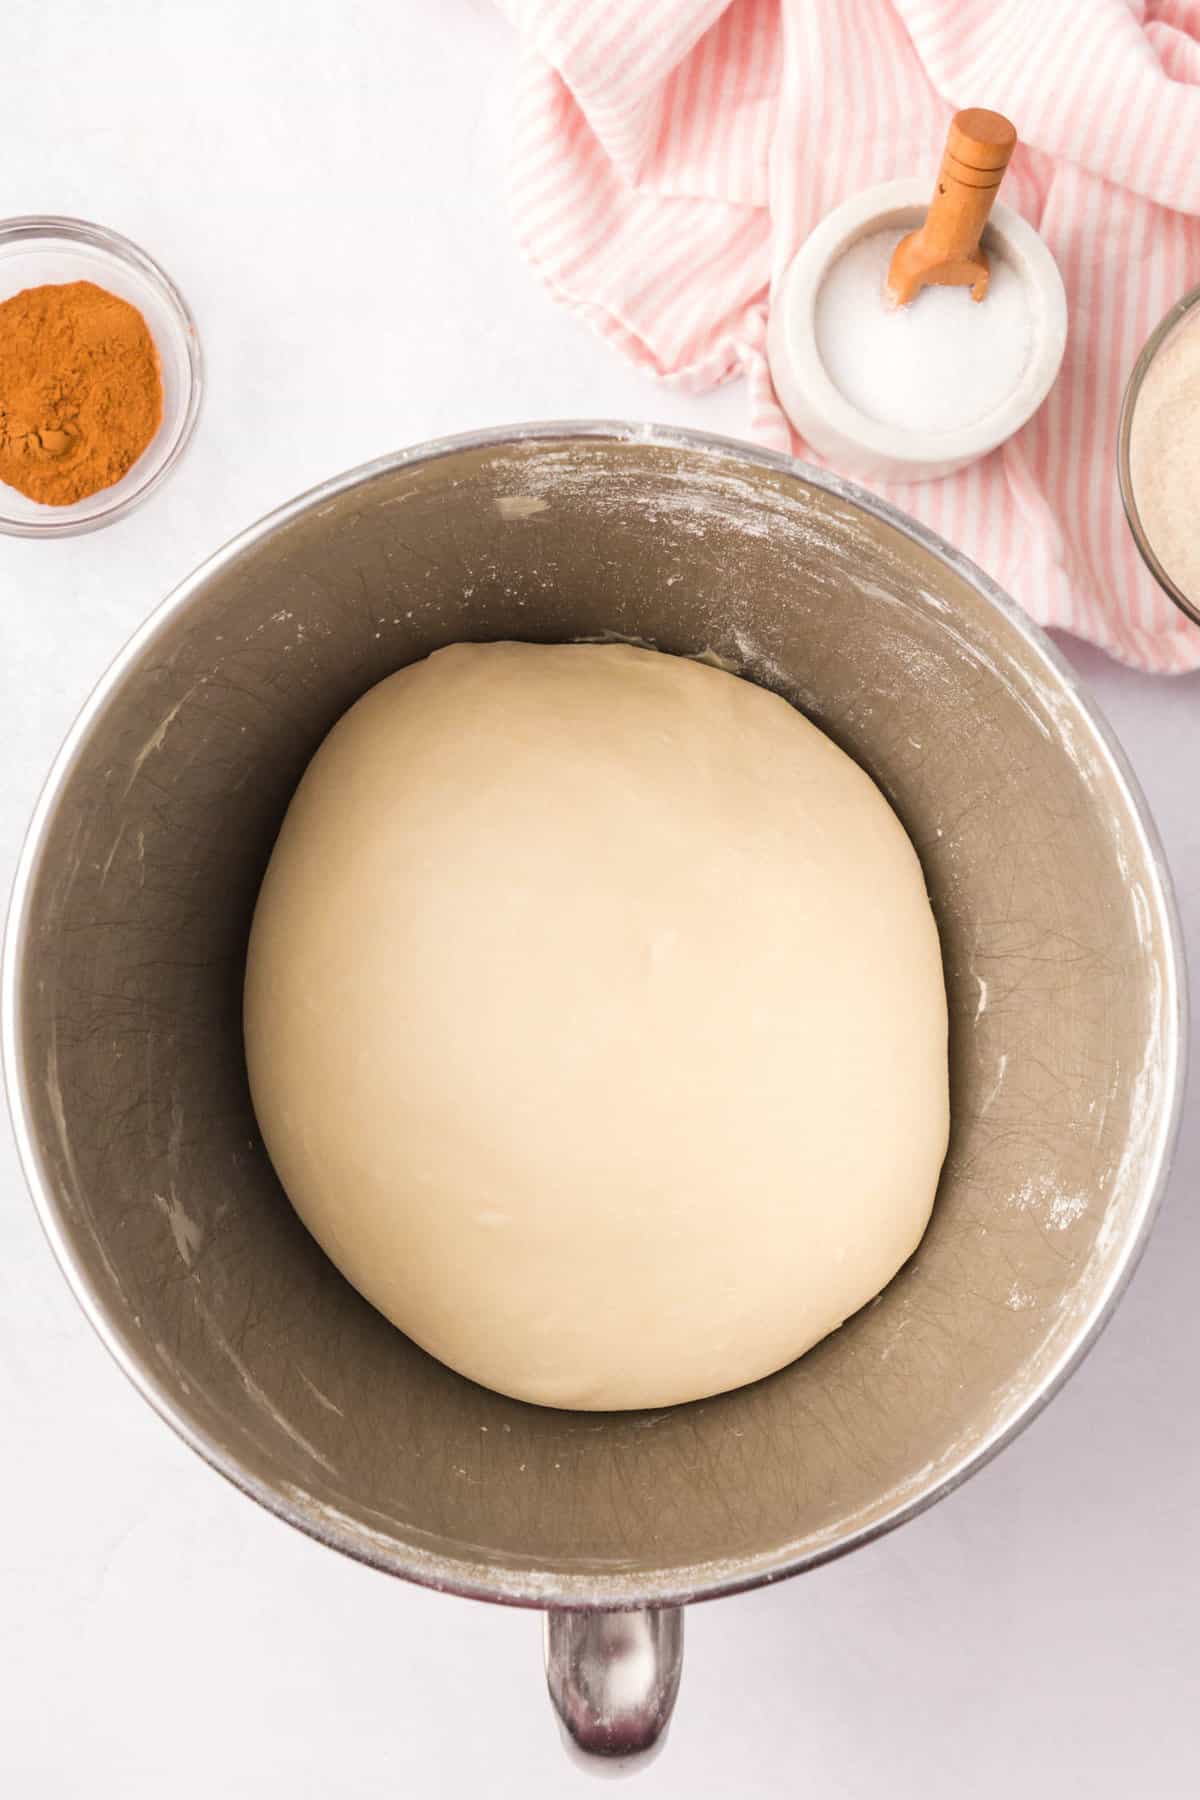 Cinnamon Swirl Bread dough in standing mixer bowl